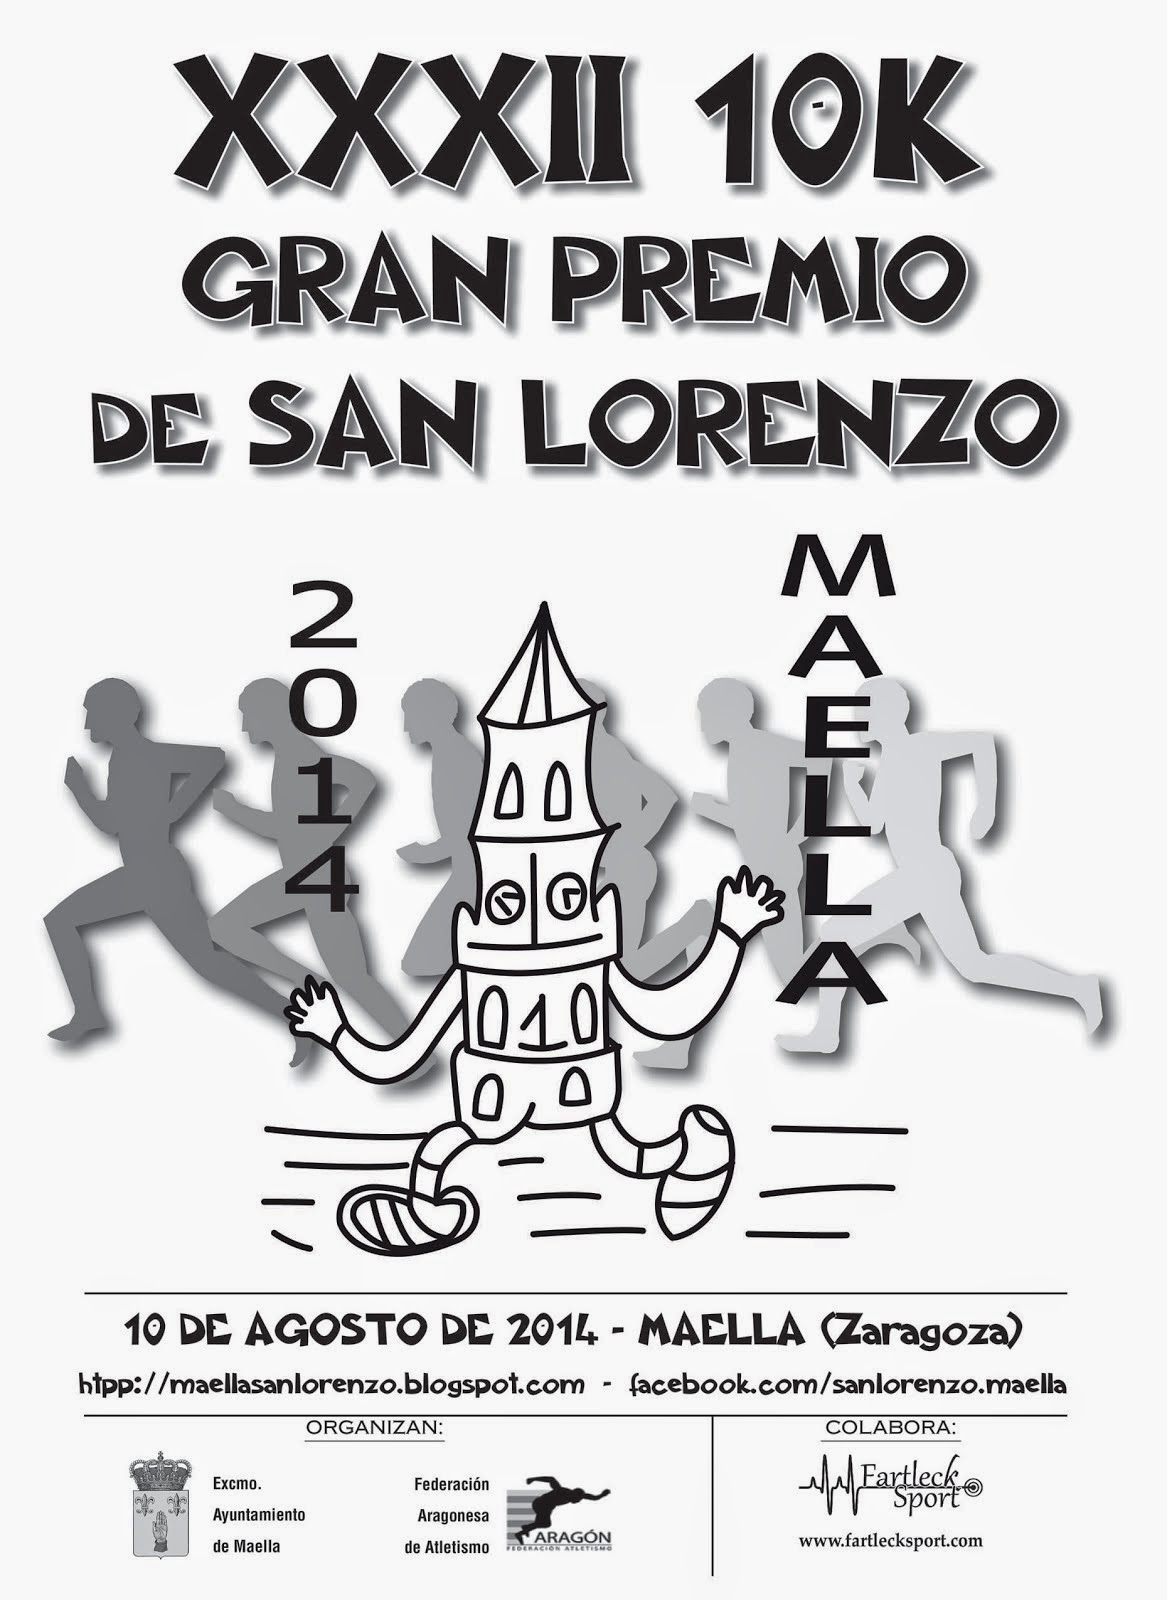 Premio San Lorenzo